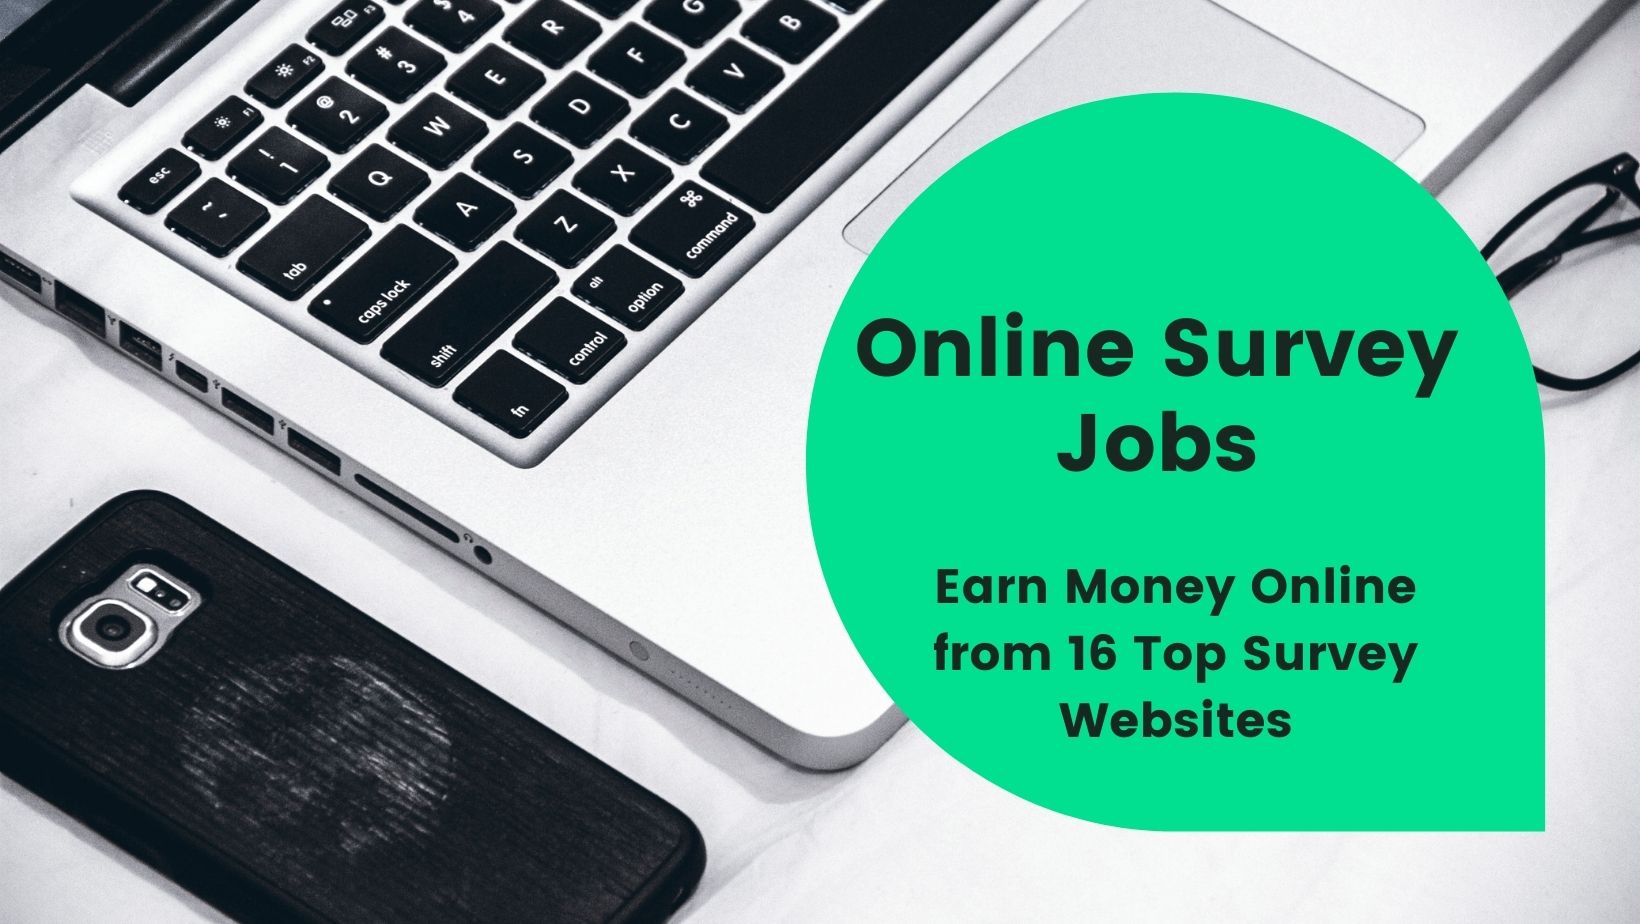 Online Survey Jobs: Earn Money Online from 16 Top Survey Websites